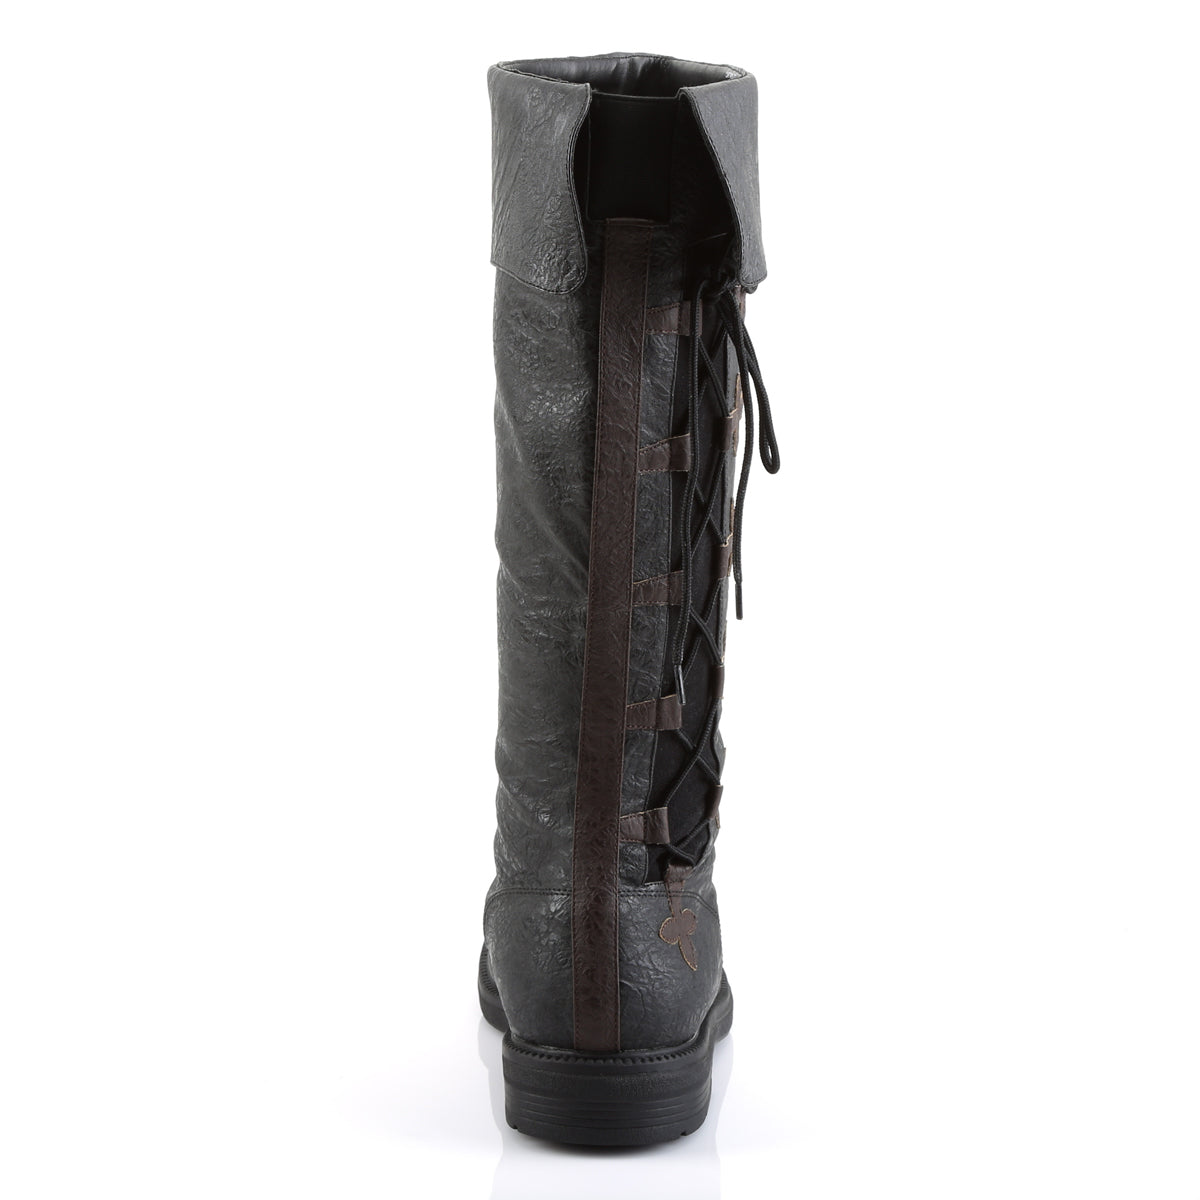 CAPTAIN-110 Fancy Dress Costume Funtasma Men's Boots Black-Brown Distressed Pu